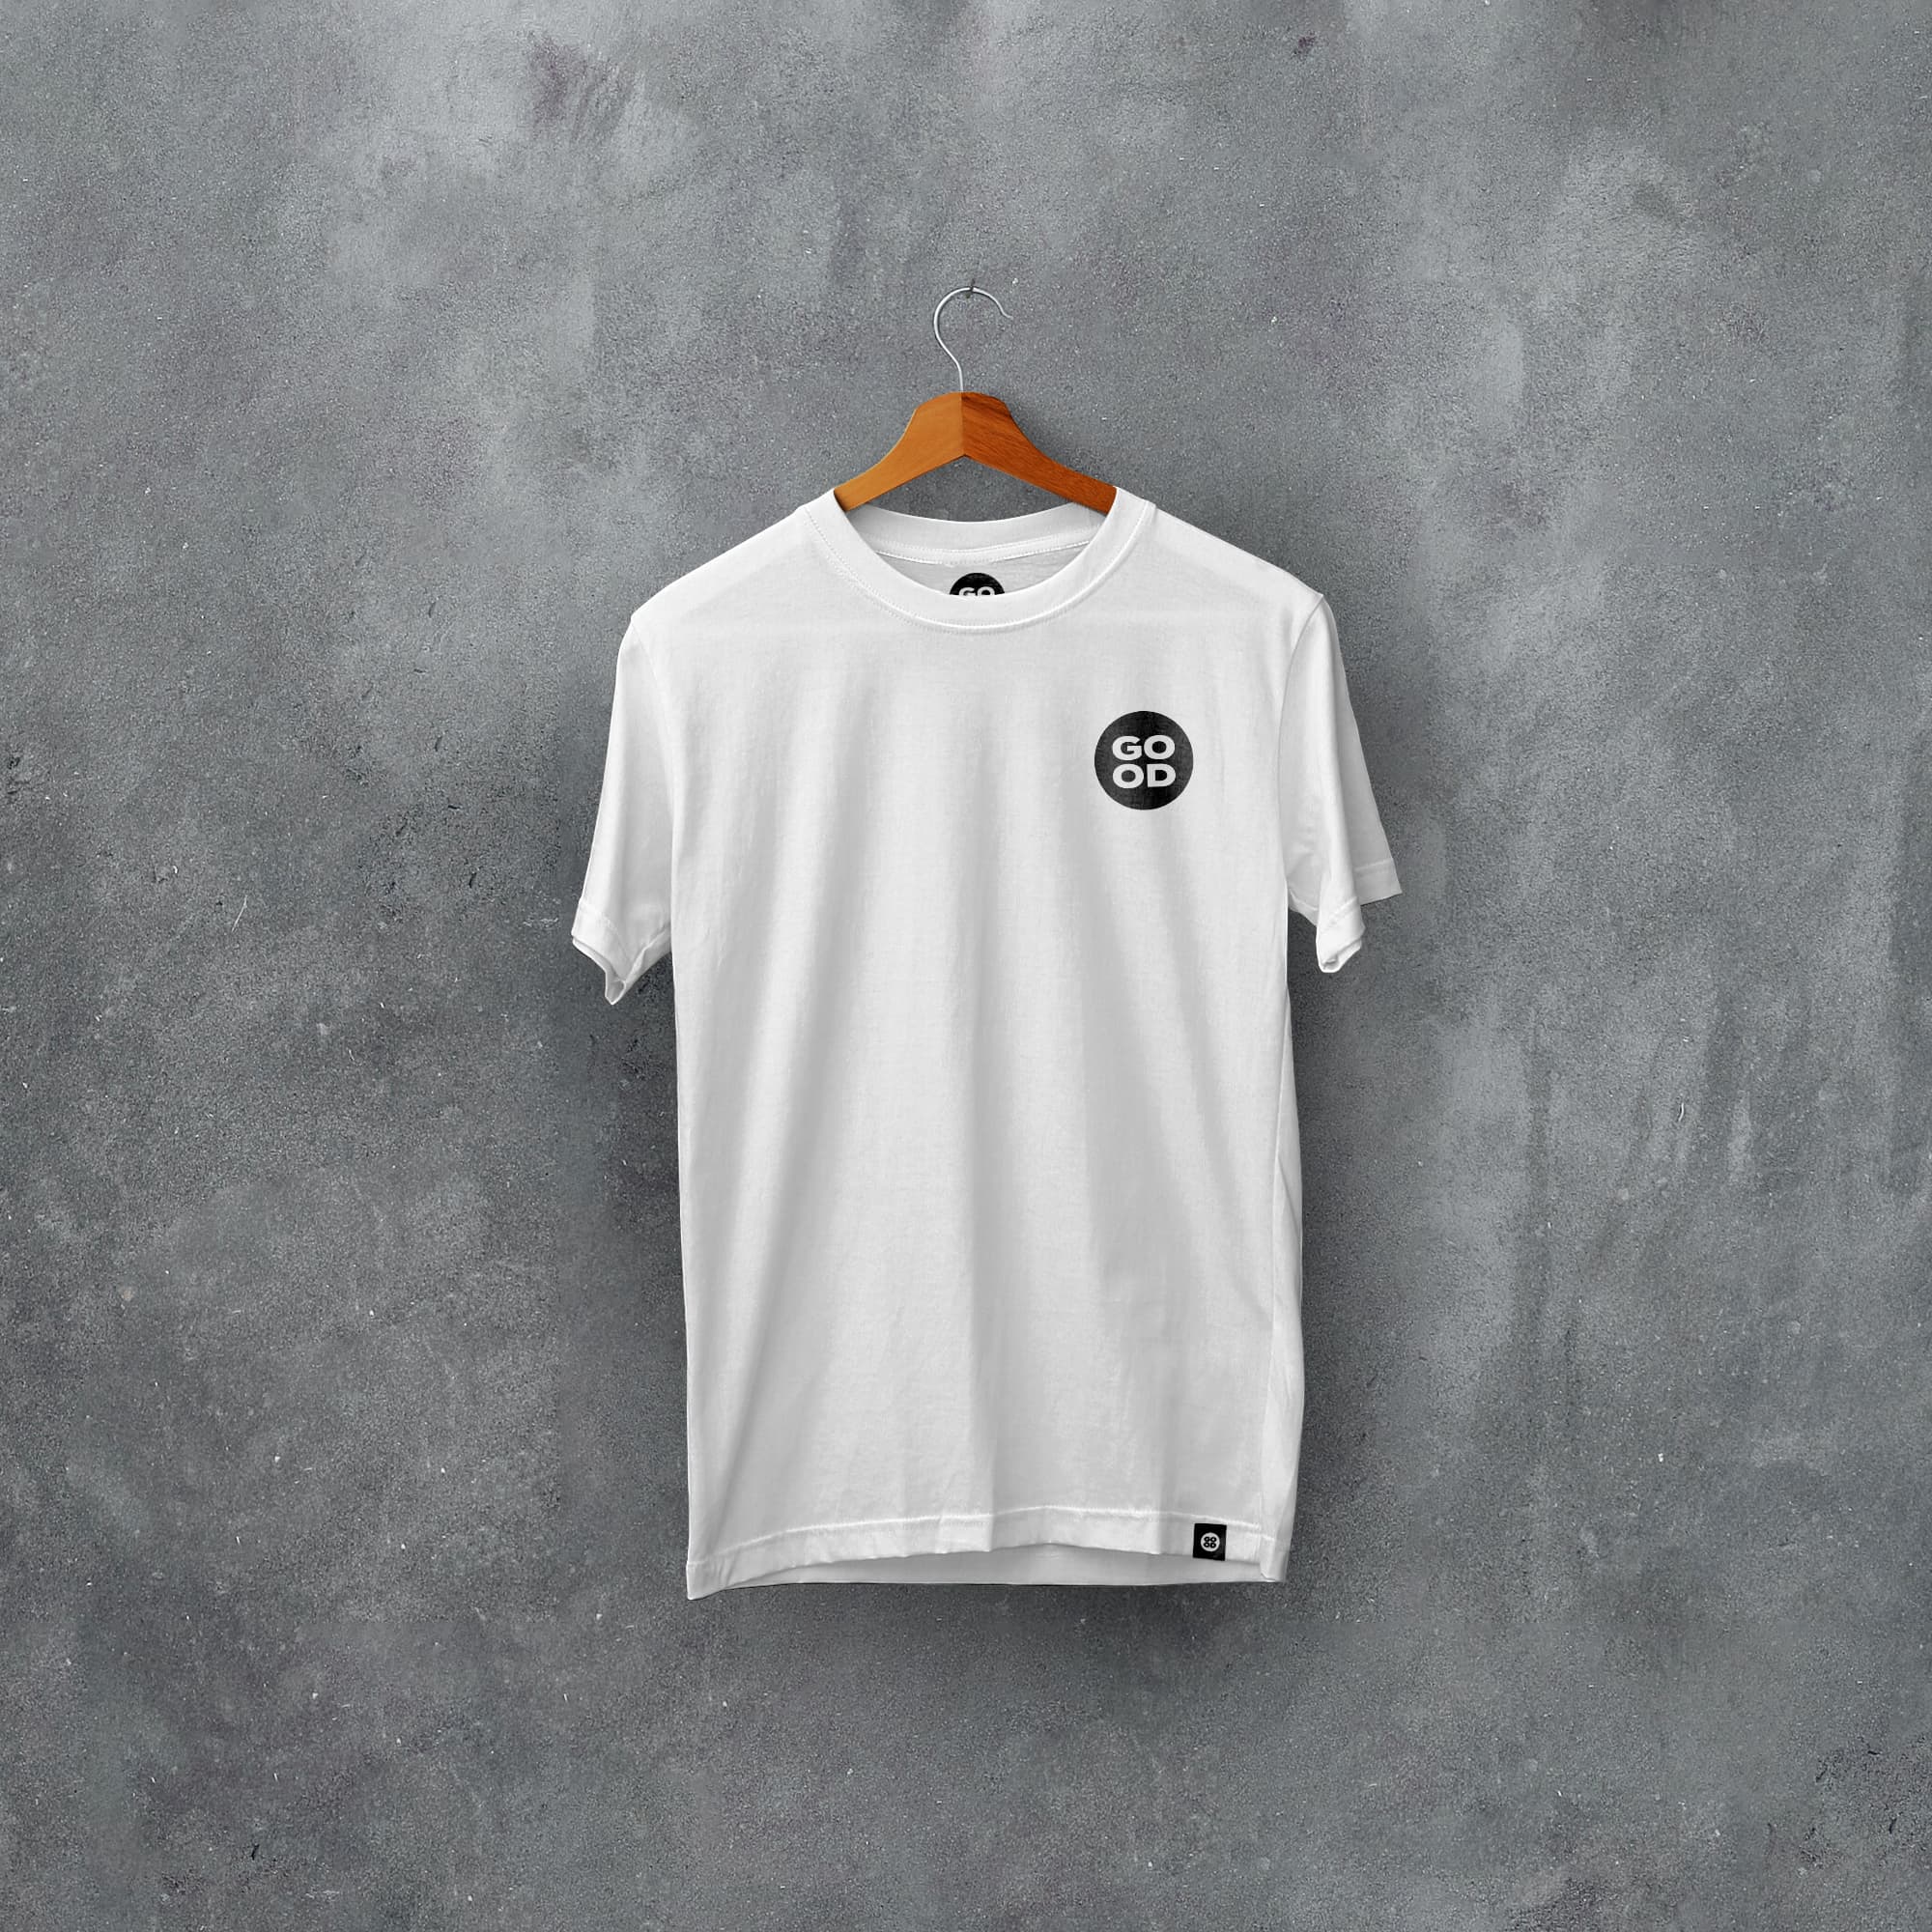 Exeter Classic Kits Football T-Shirt